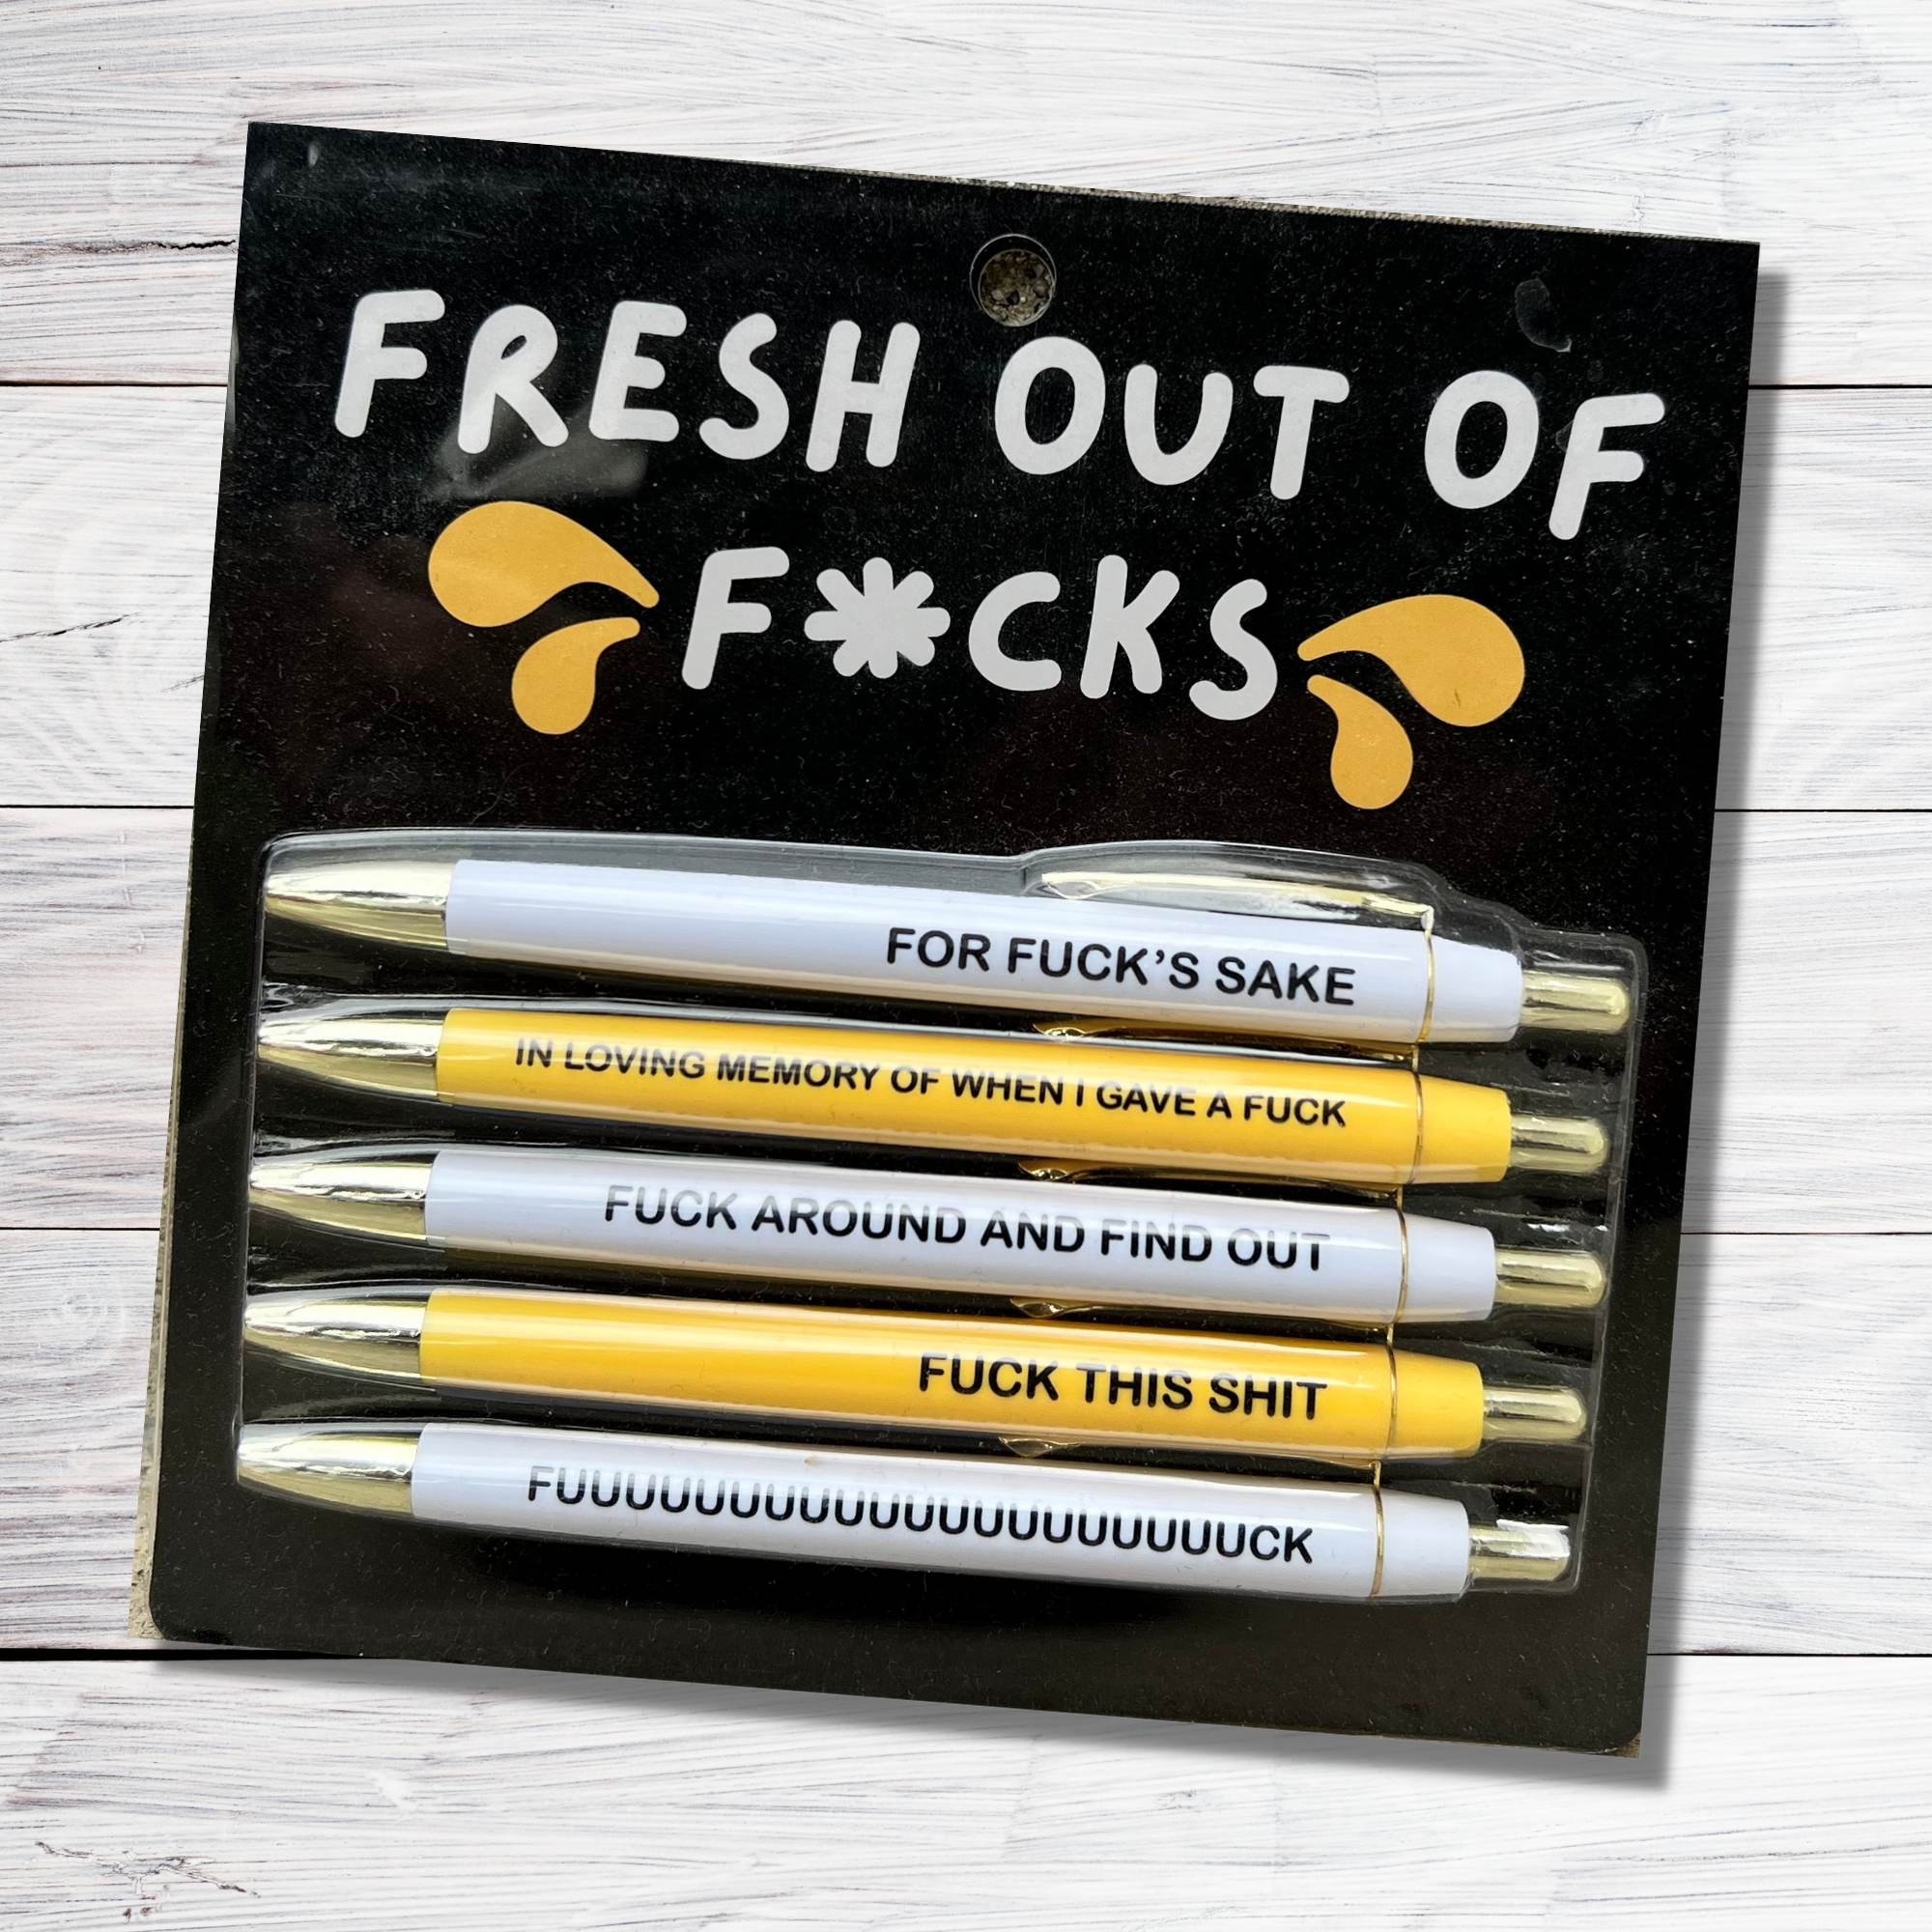 Stream Fuck Pens (prod. Anon) by A$AP Pencil